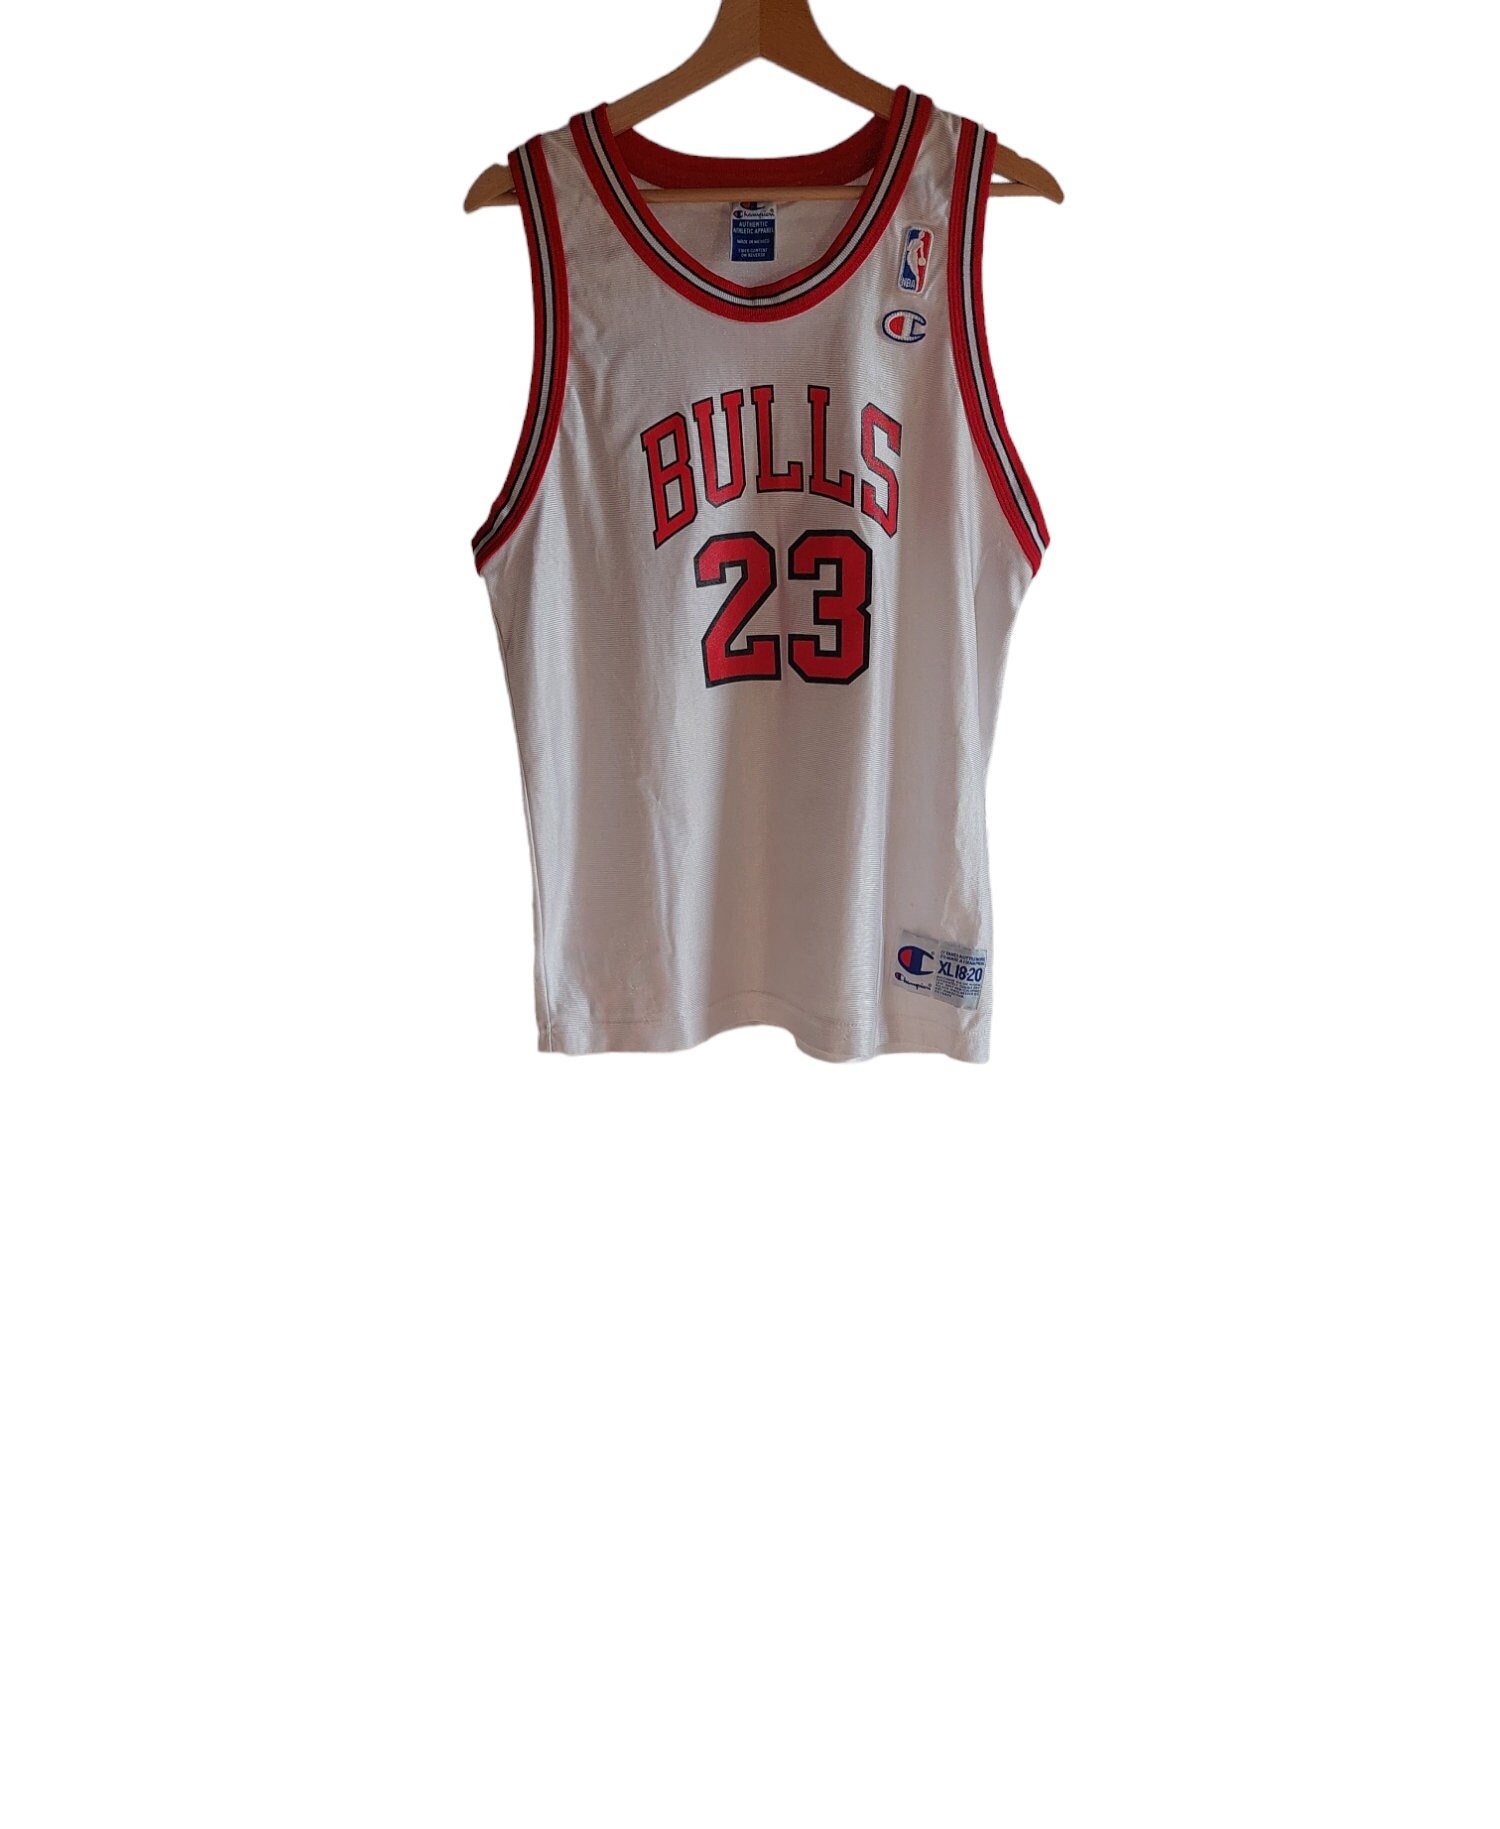 Dennis Rodman #91 Chicago Bulls Champion NBA Black Jersey 44 NEW deadstock  NWT